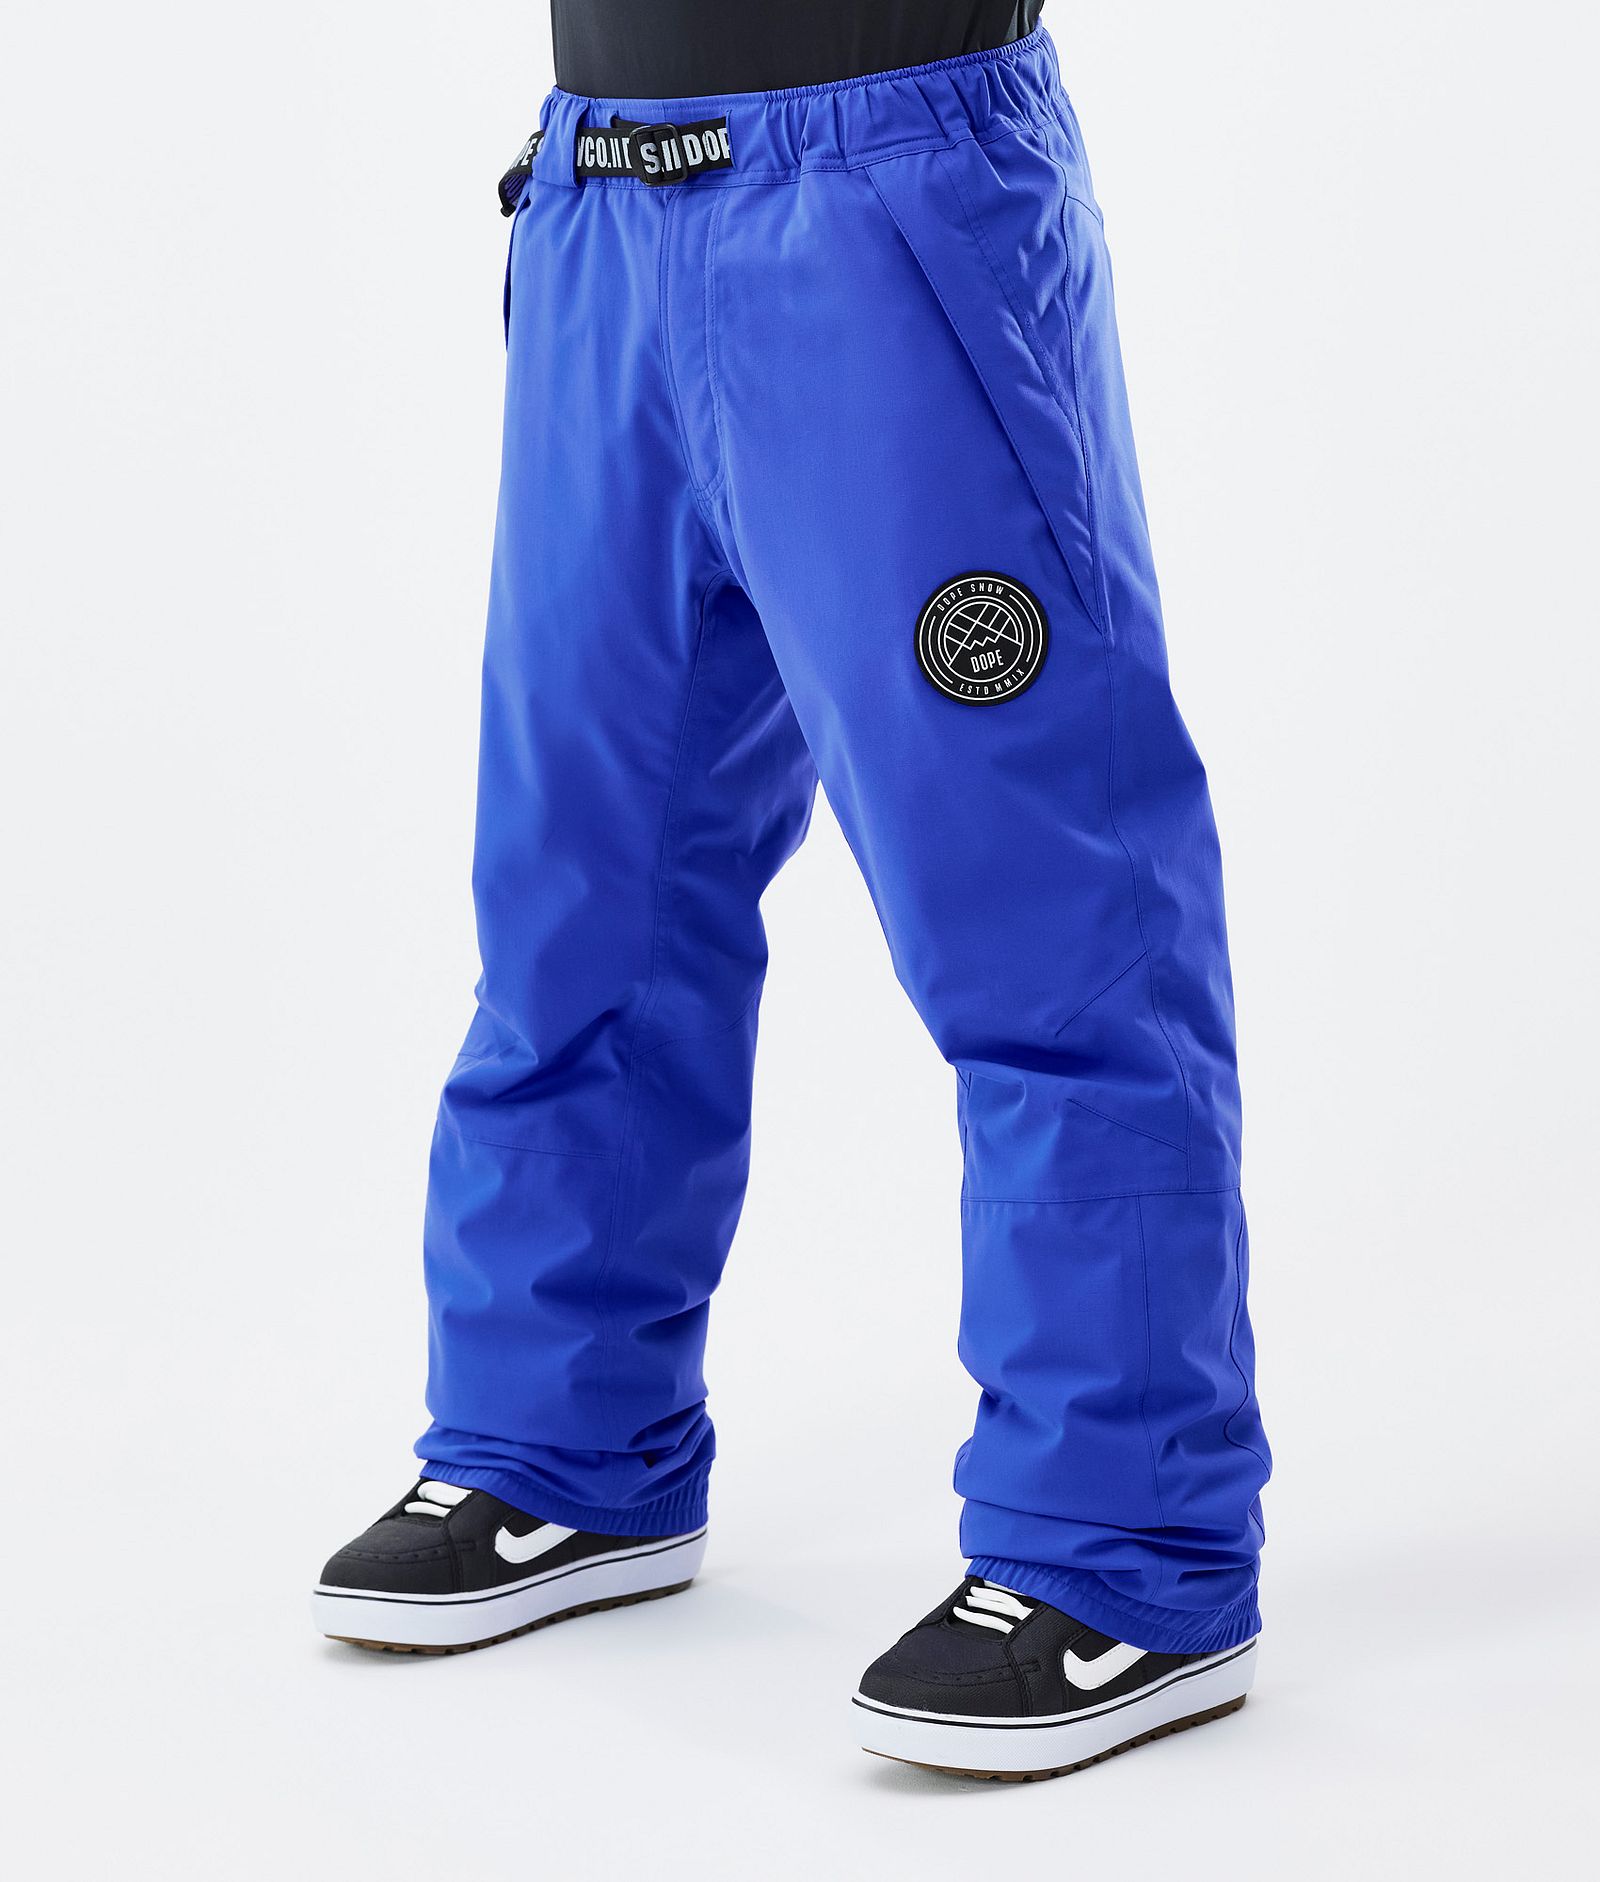 Blizzard Pantalones Snowboard Hombre Cobalt Blue